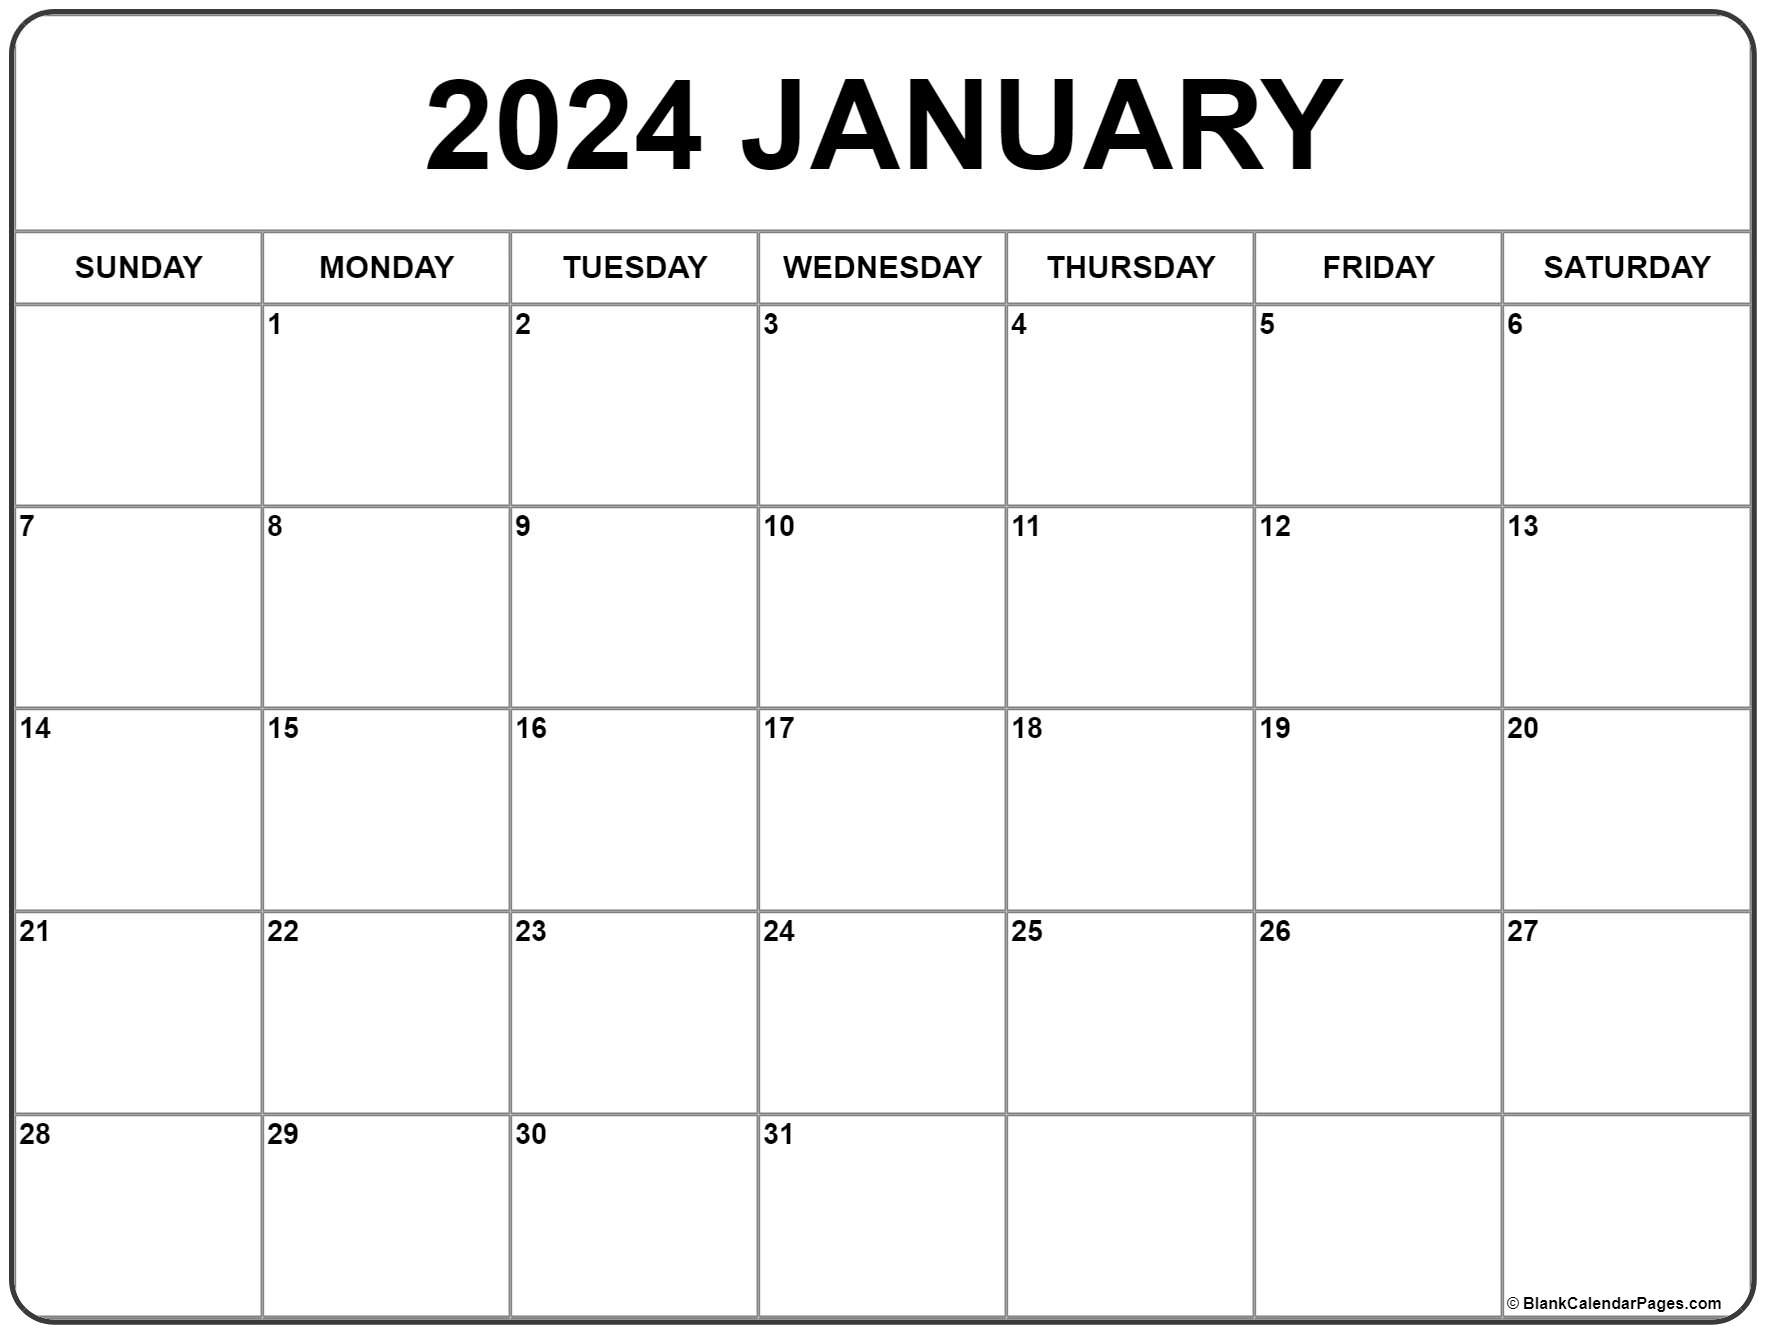 January 2024 Calendar | Free Printable Calendar for Free 2024 January Printable Calendar